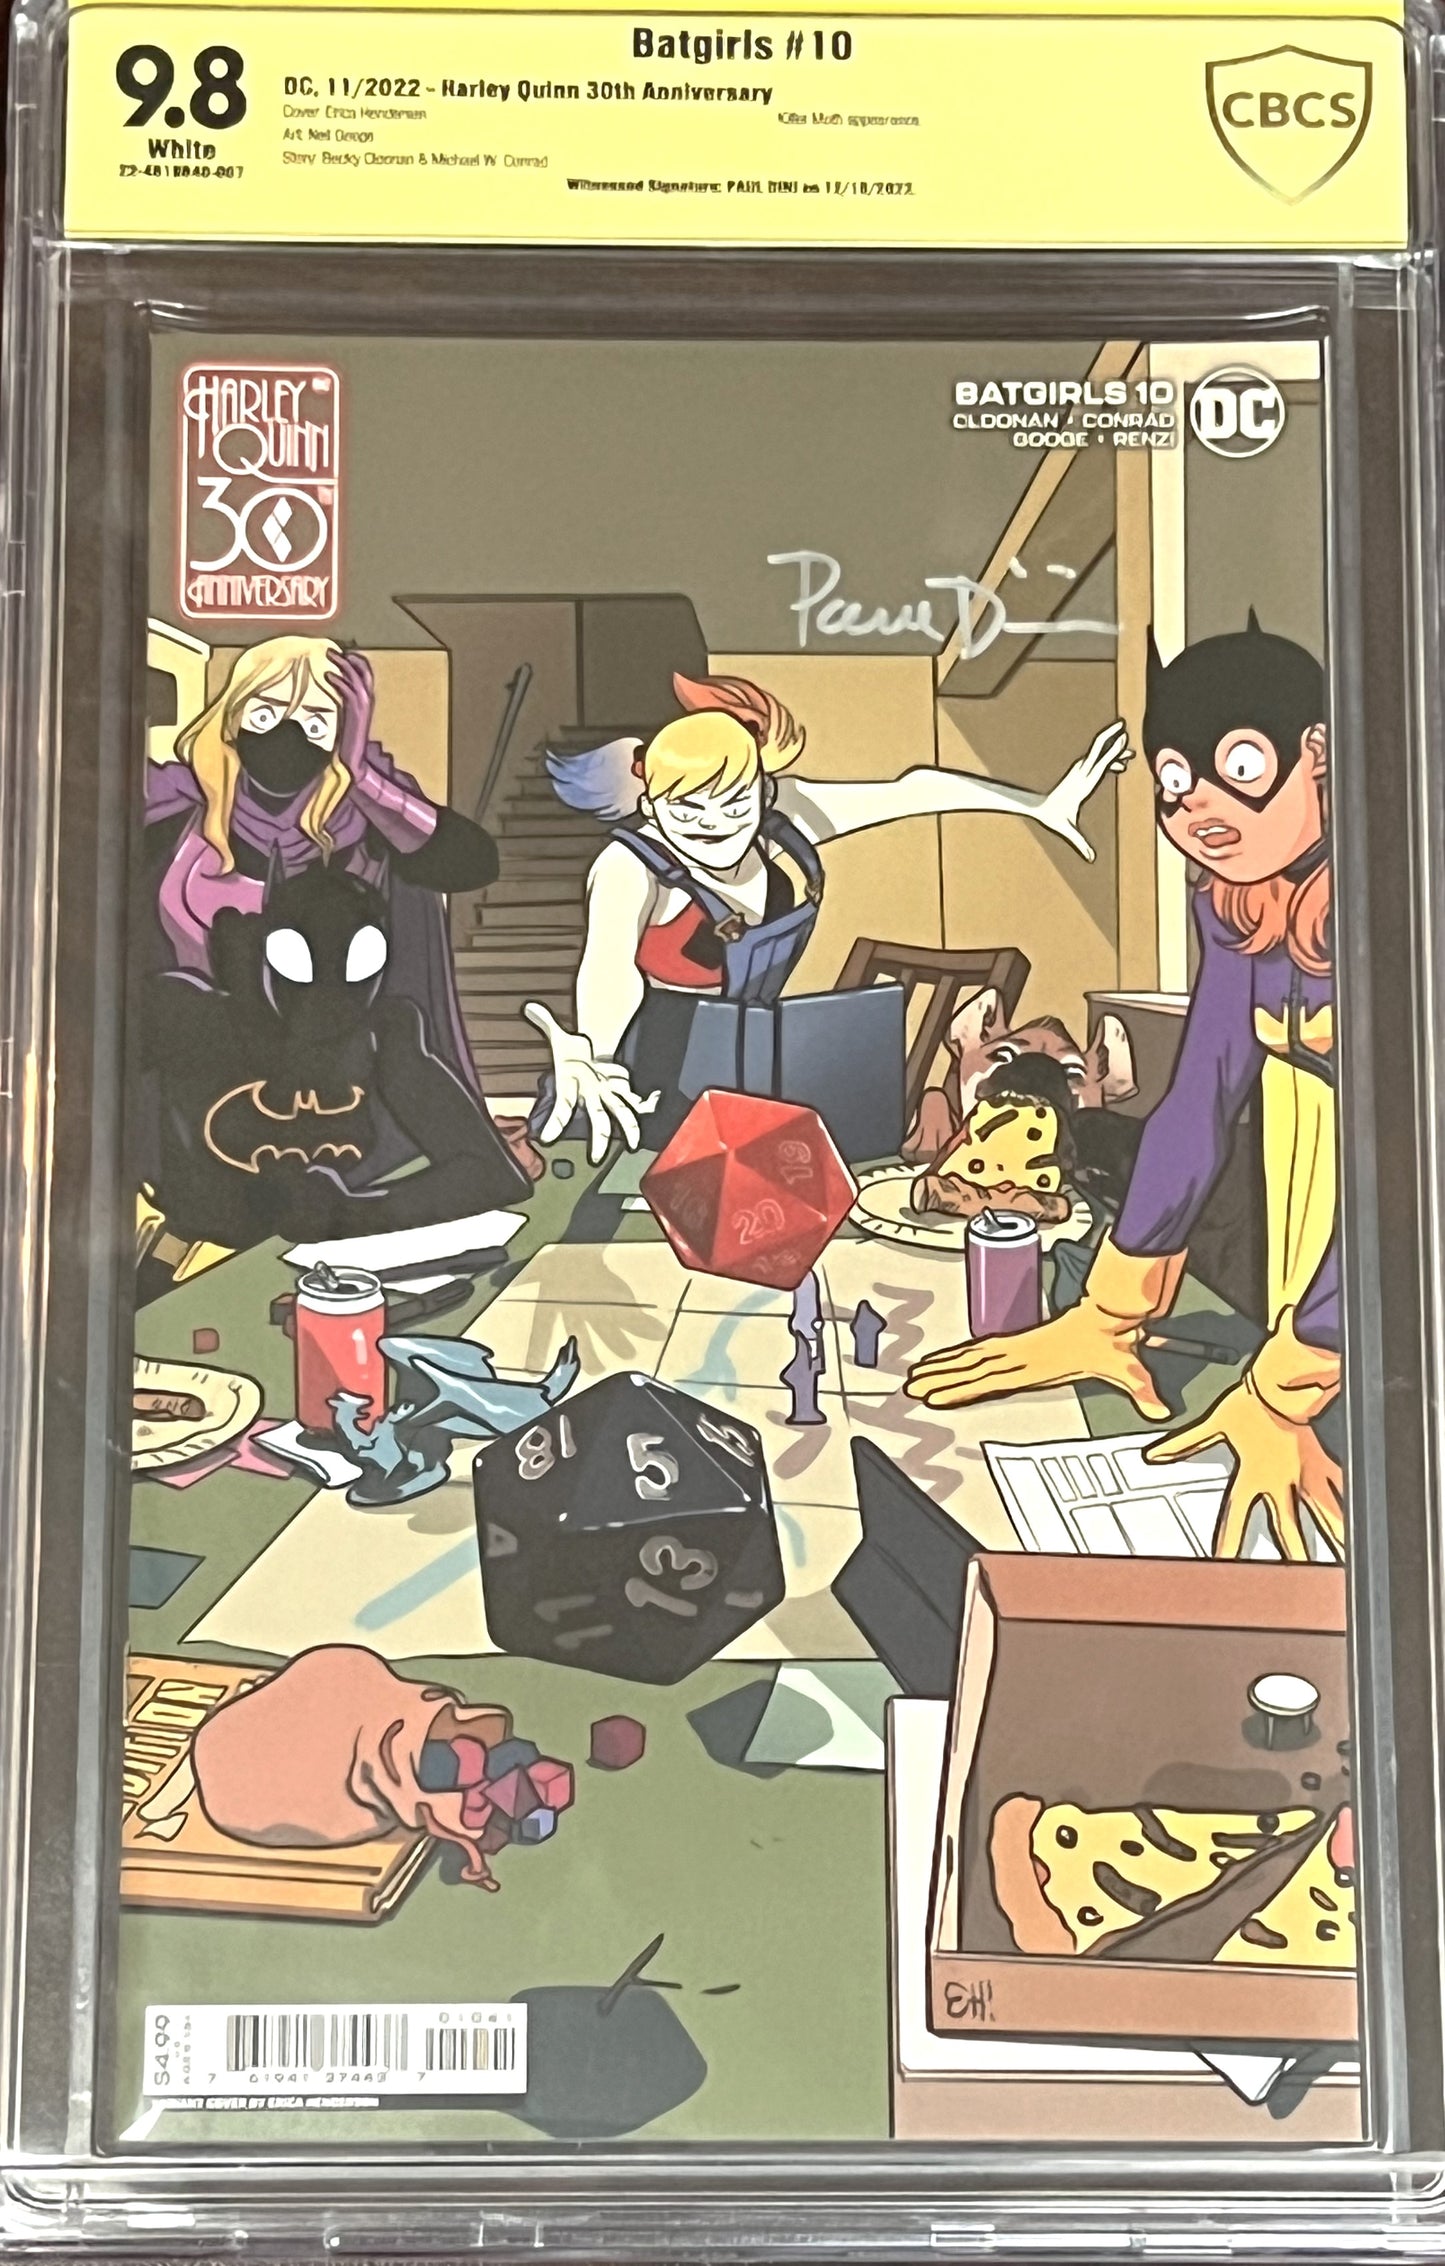 Batgirls #10 Harley Quinn 30th Anniversary Variant